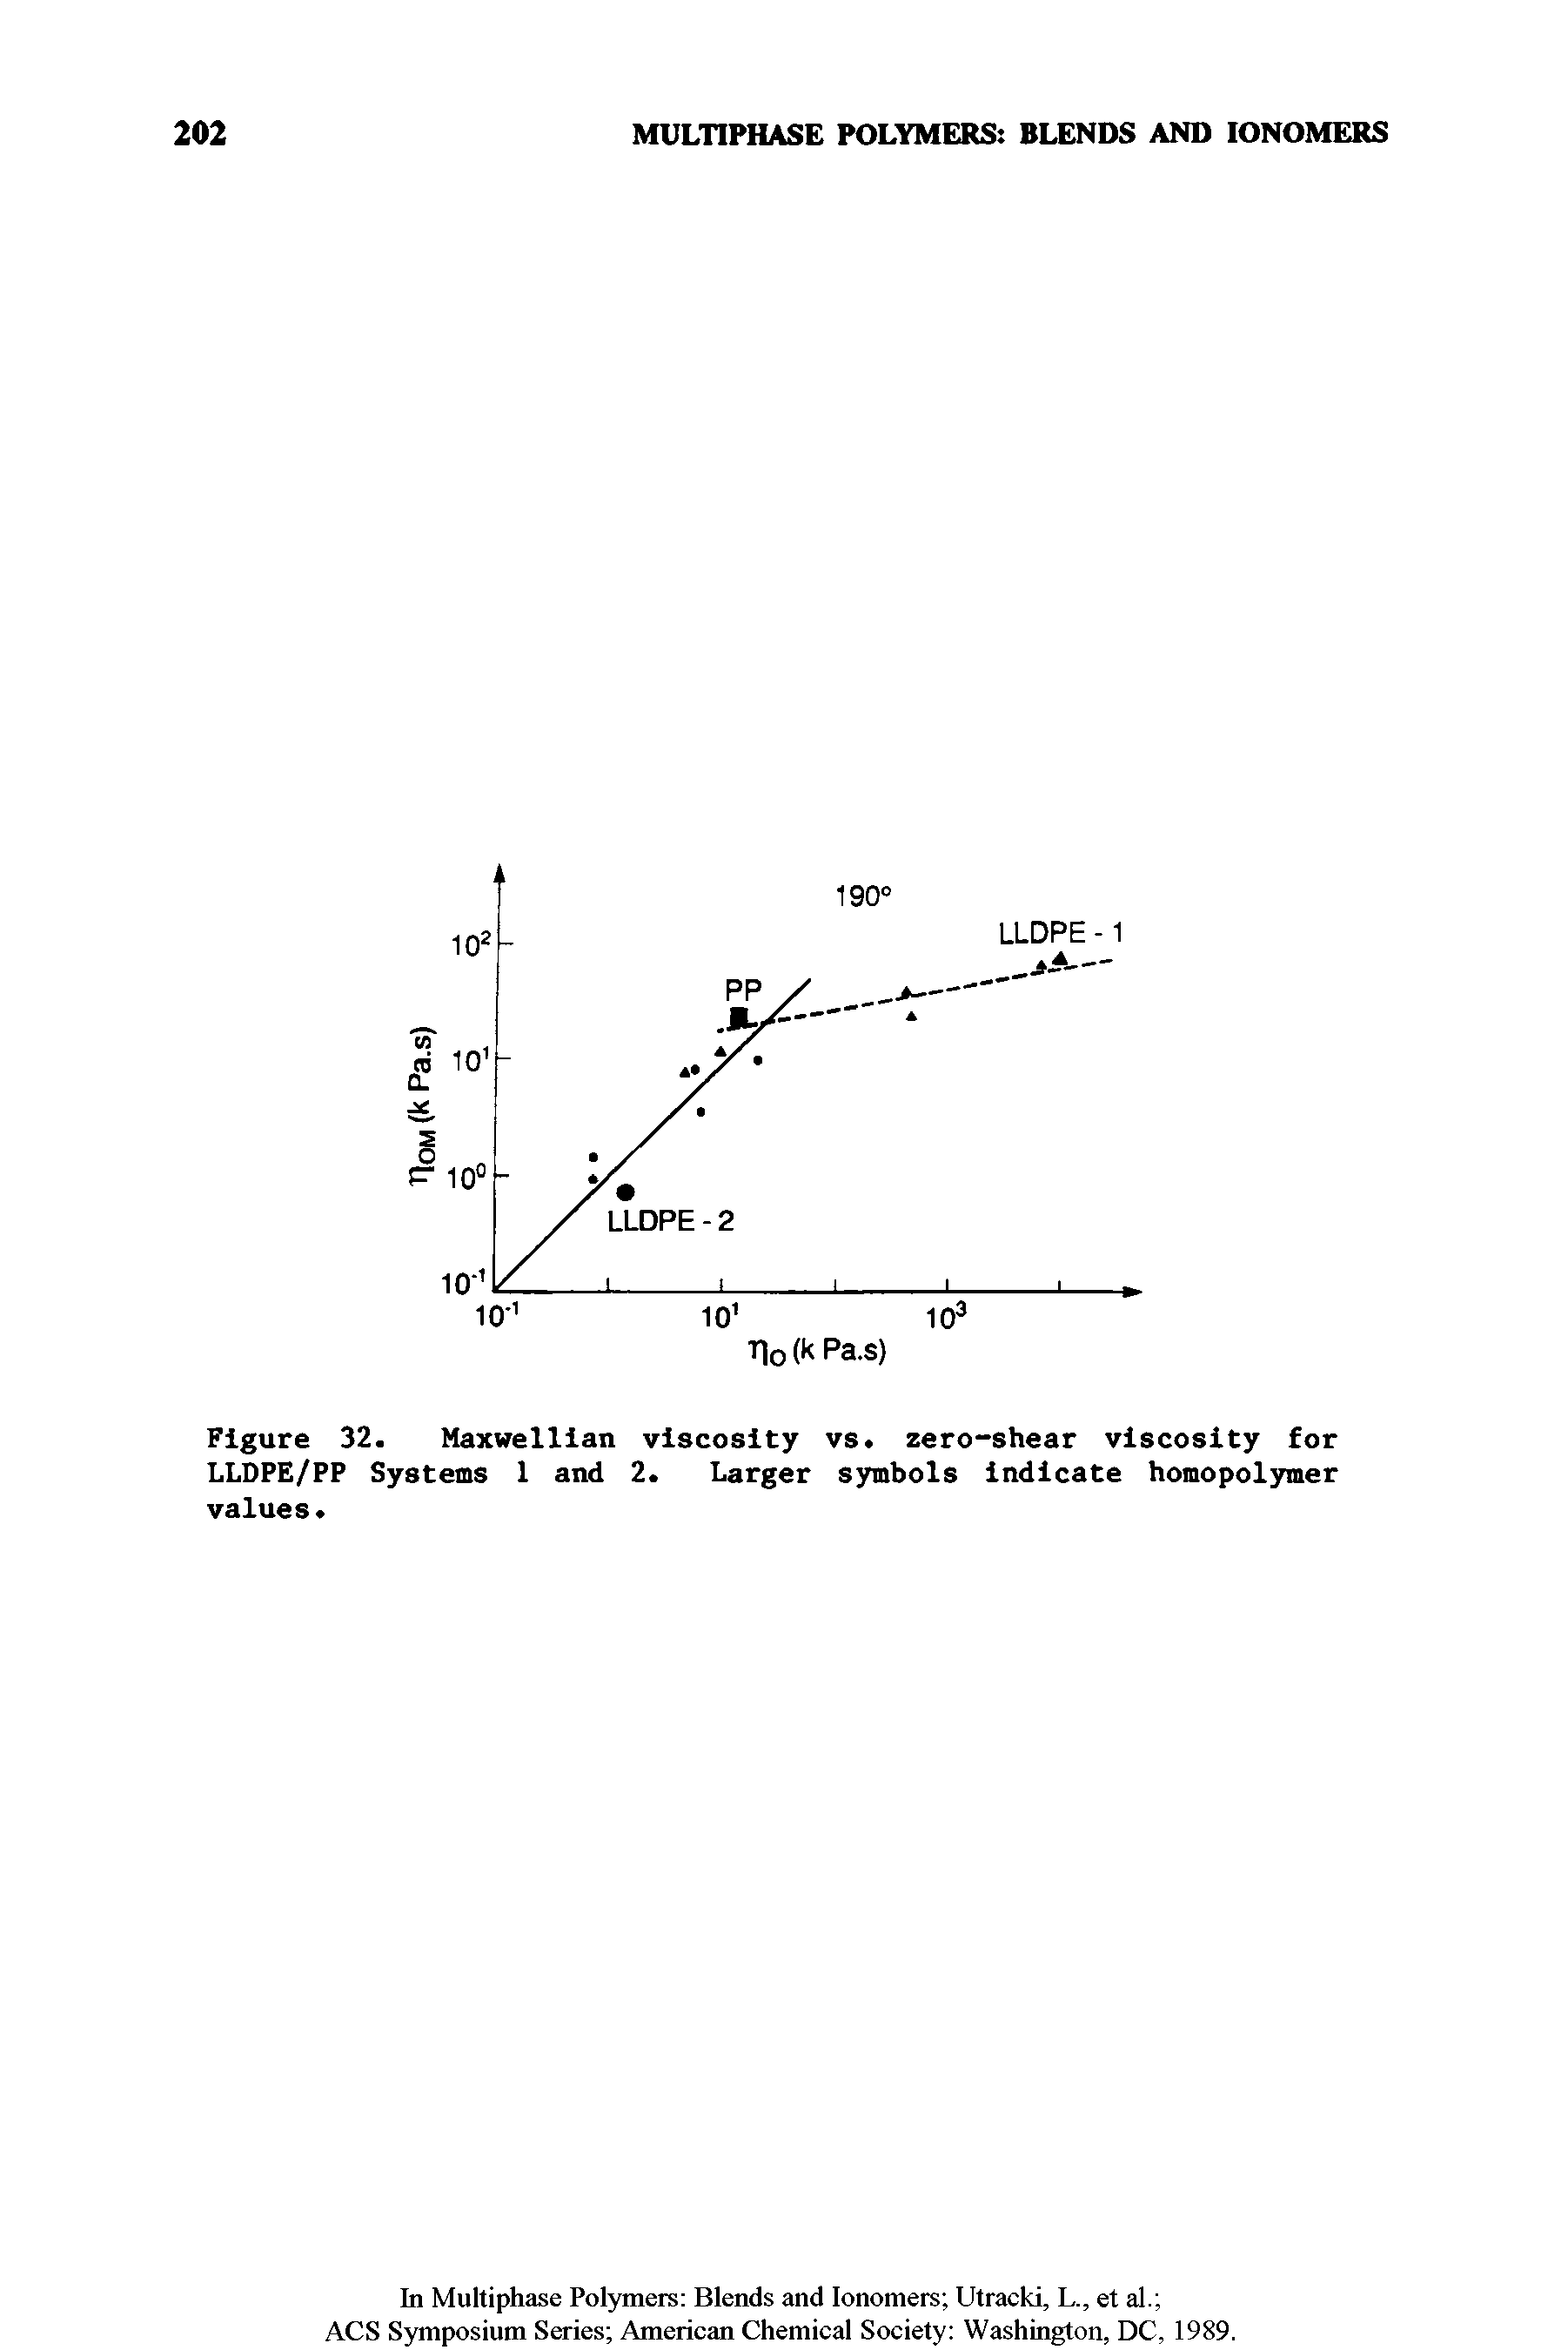 Figure 32. Maxwellian viscosity vs. zero-shear viscosity for LLDPE/PP Systems 1 and 2. Larger symbols indicate homopolymer values.